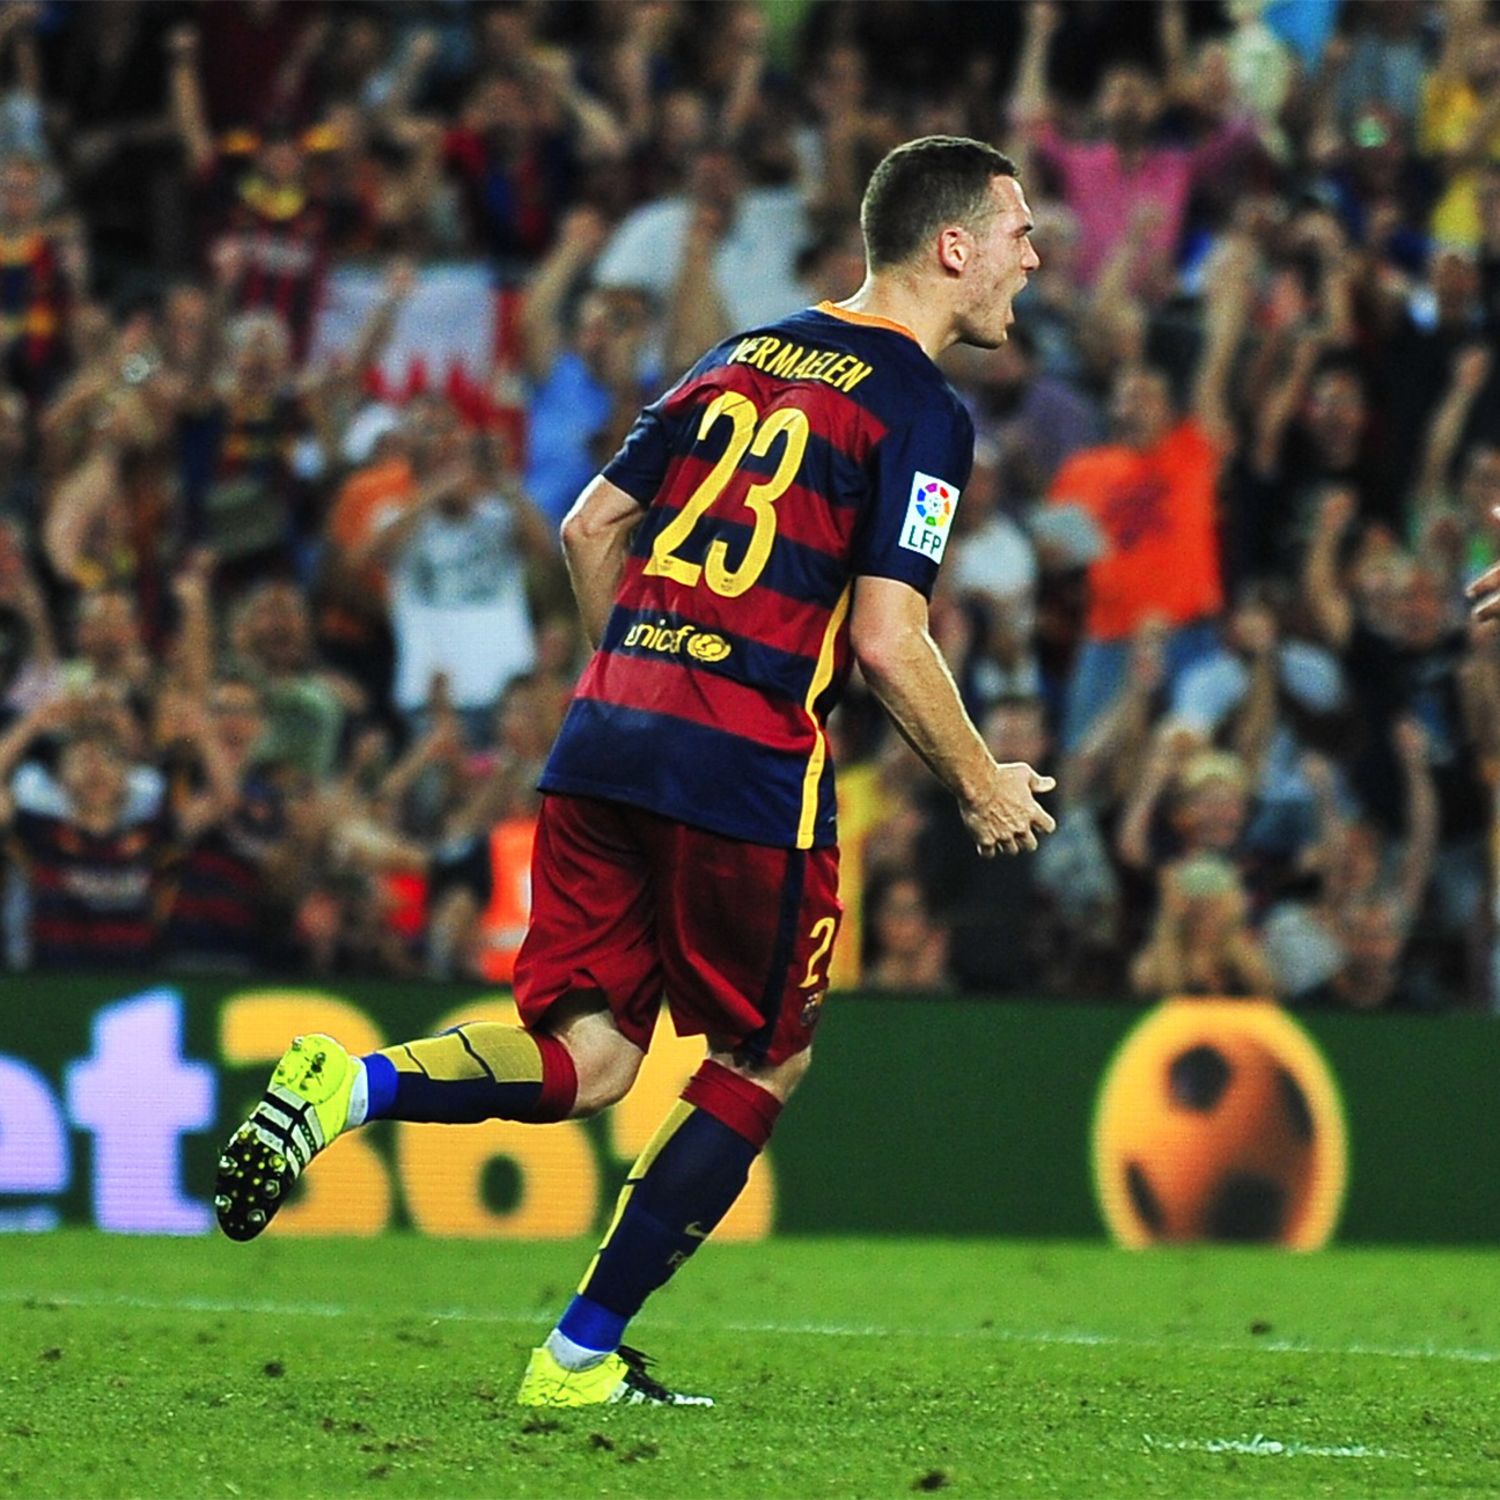 Thomas Vermaelen an unlikely hero for Barcelona vs. Malaga - ESPN FC